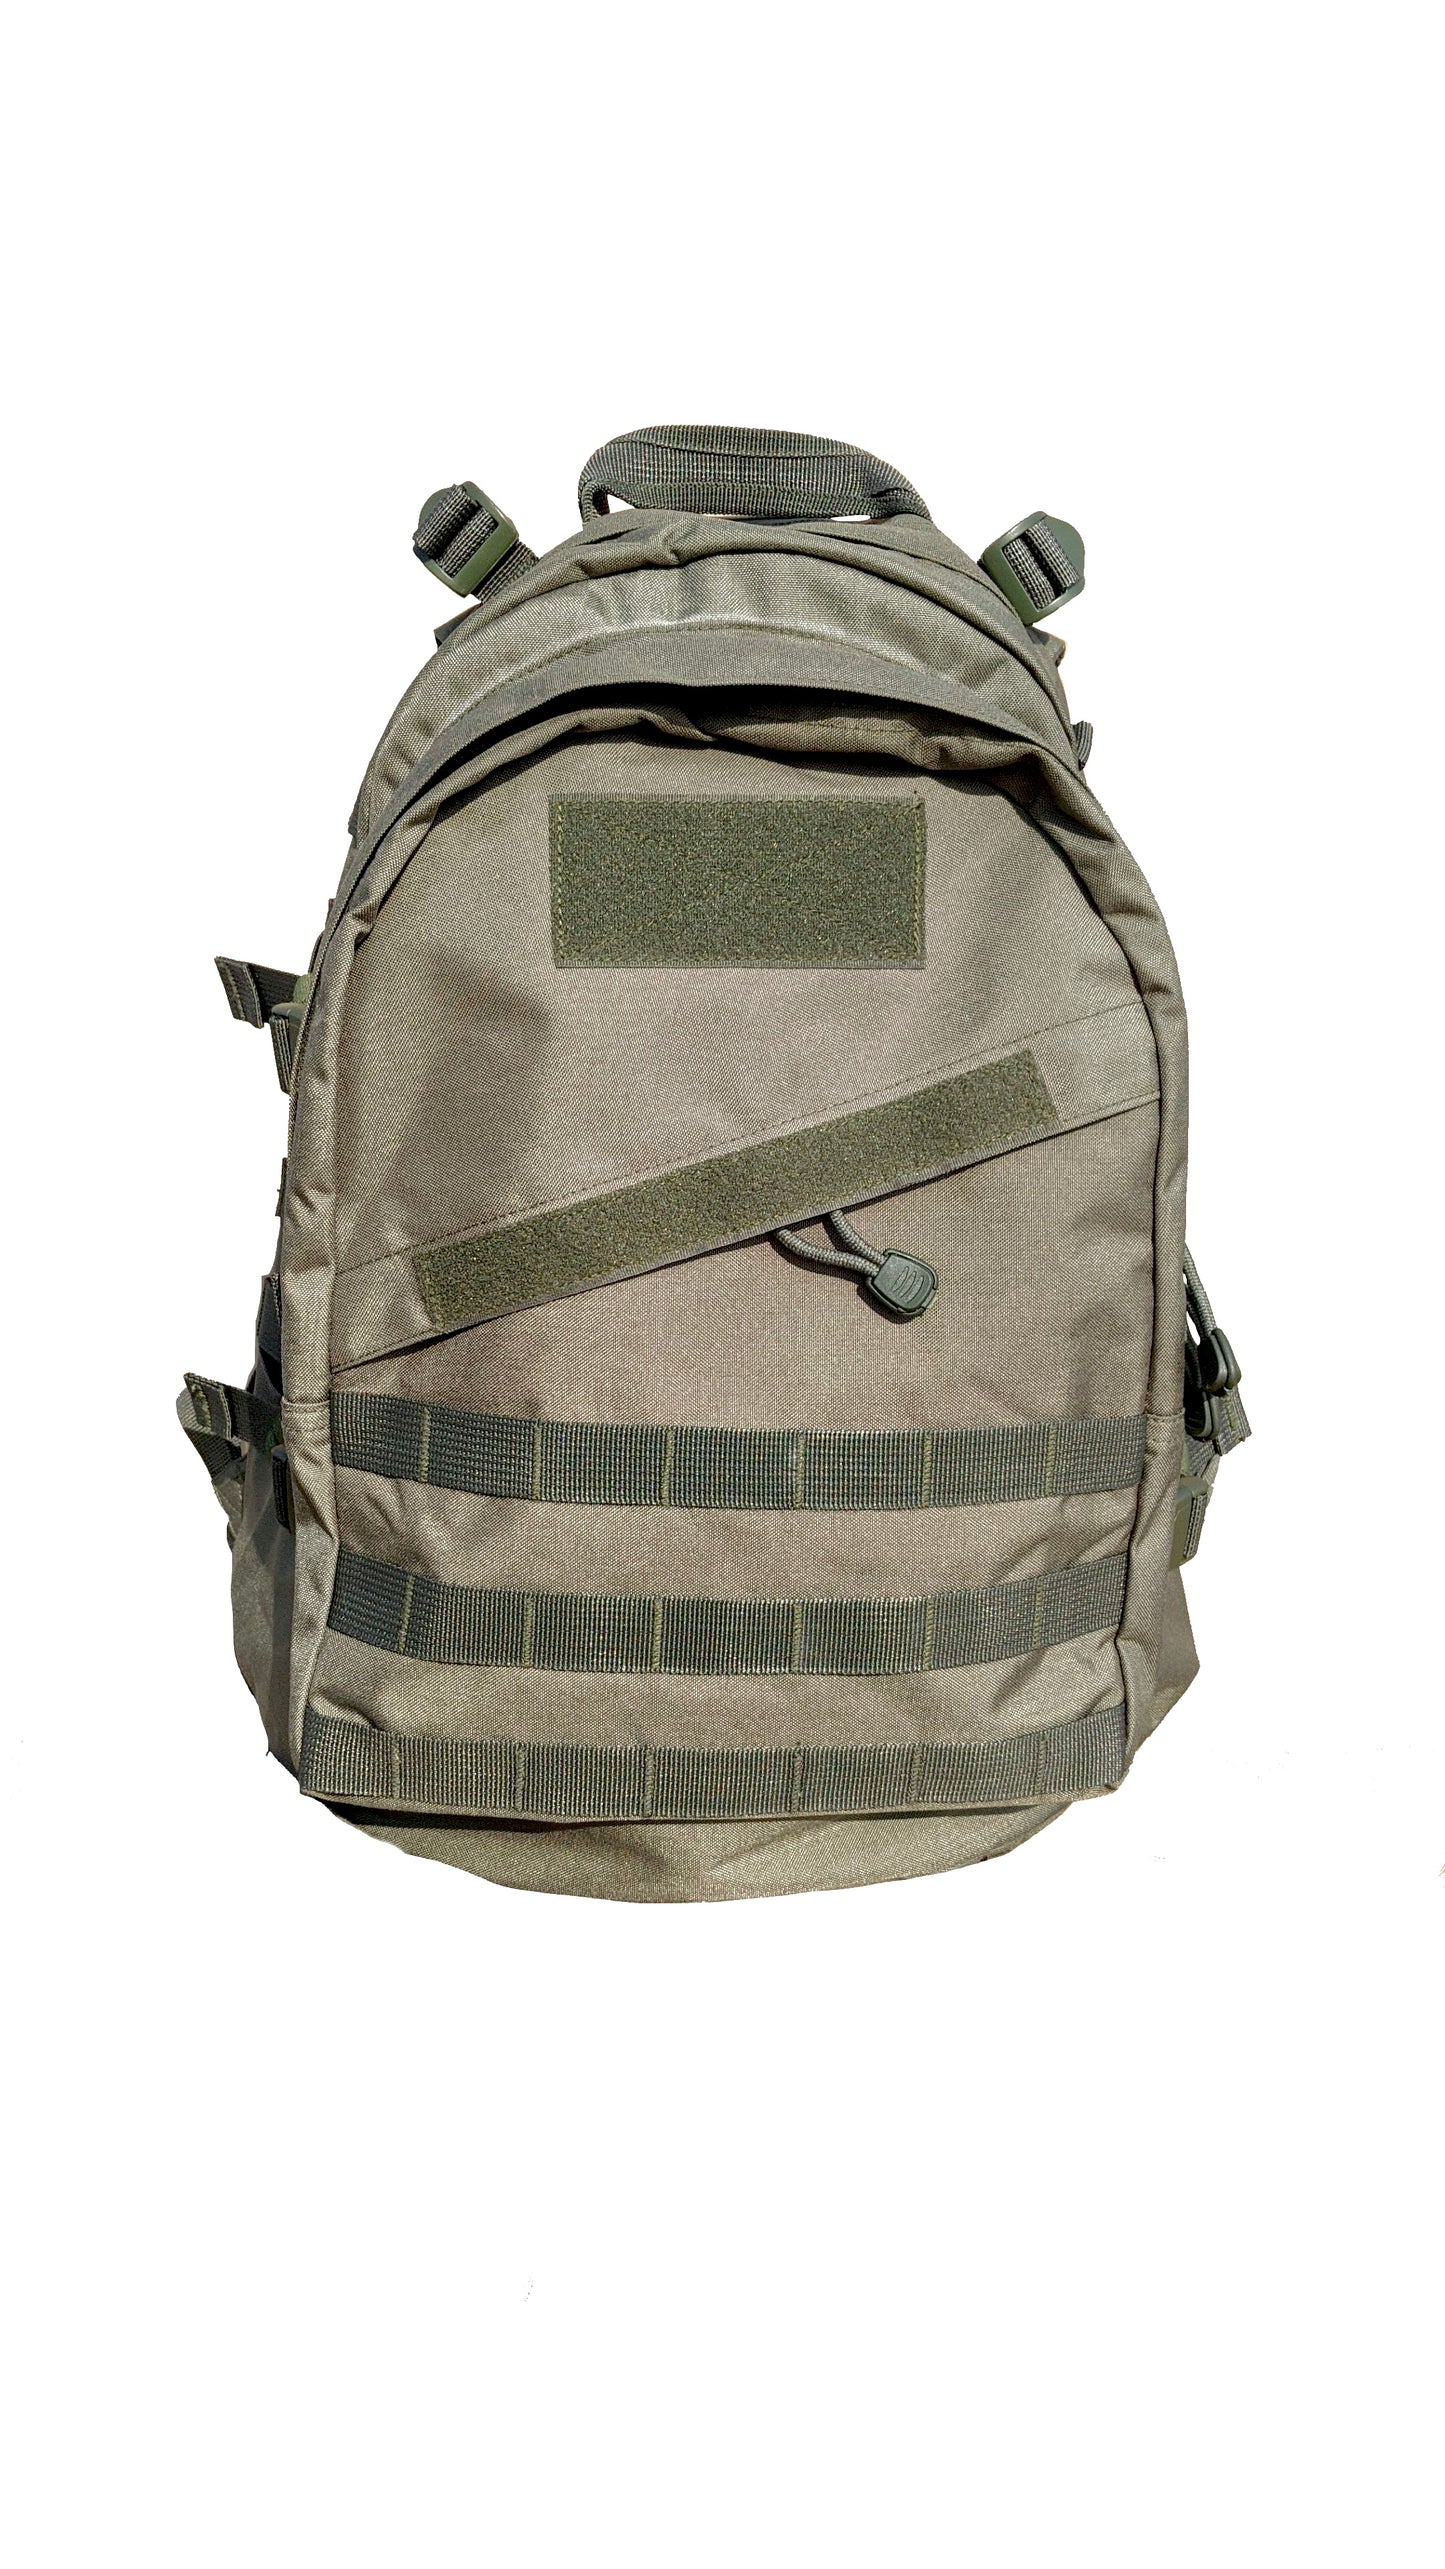 Specter Defense 3 Day Tactical Assault Bag